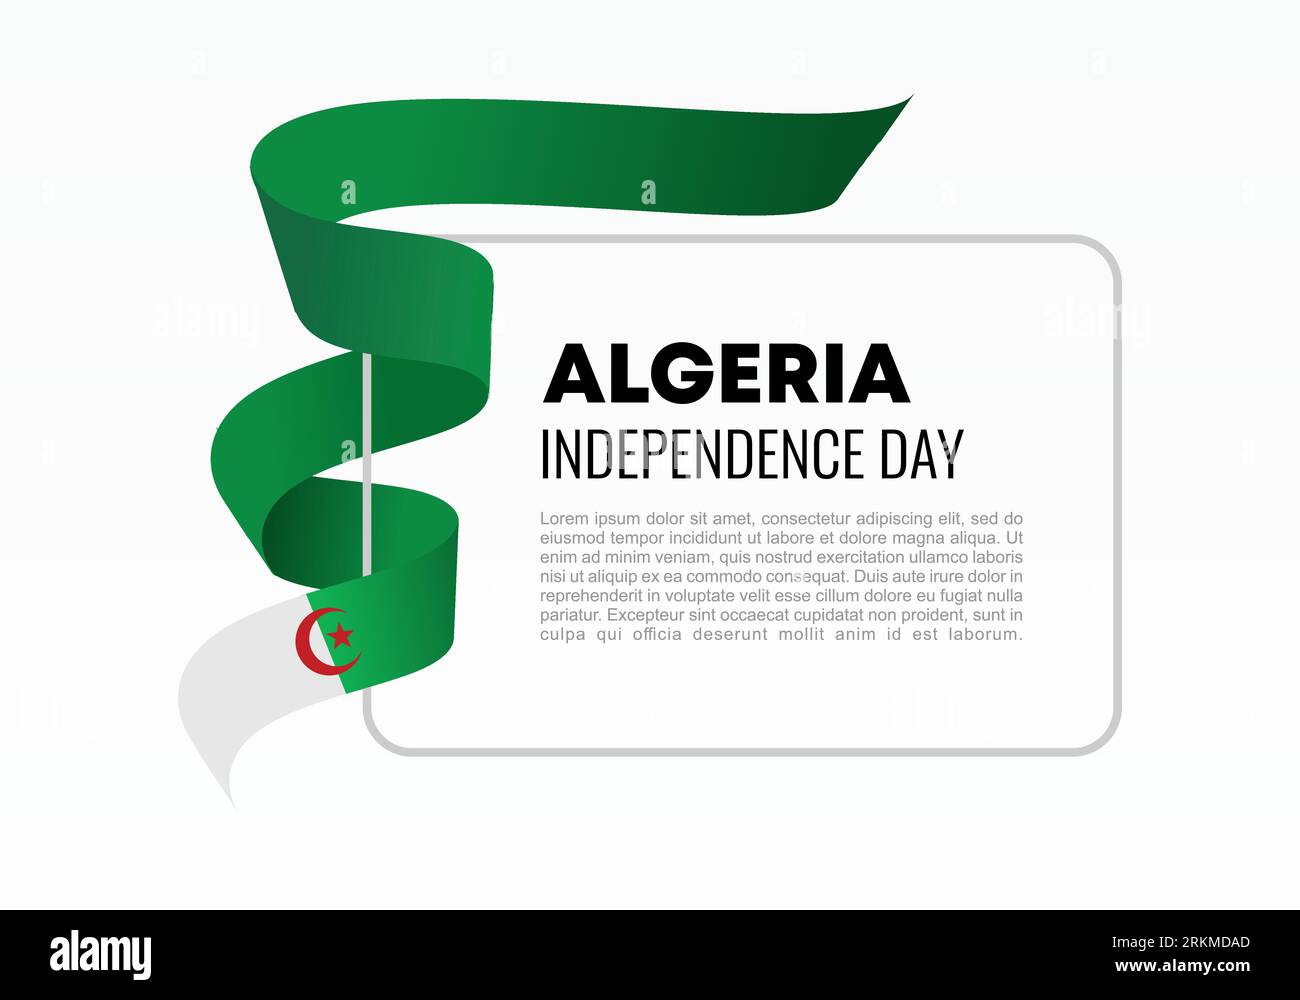 Algeria Independence day background banner poster for national celebration on July 5. Stock Vector